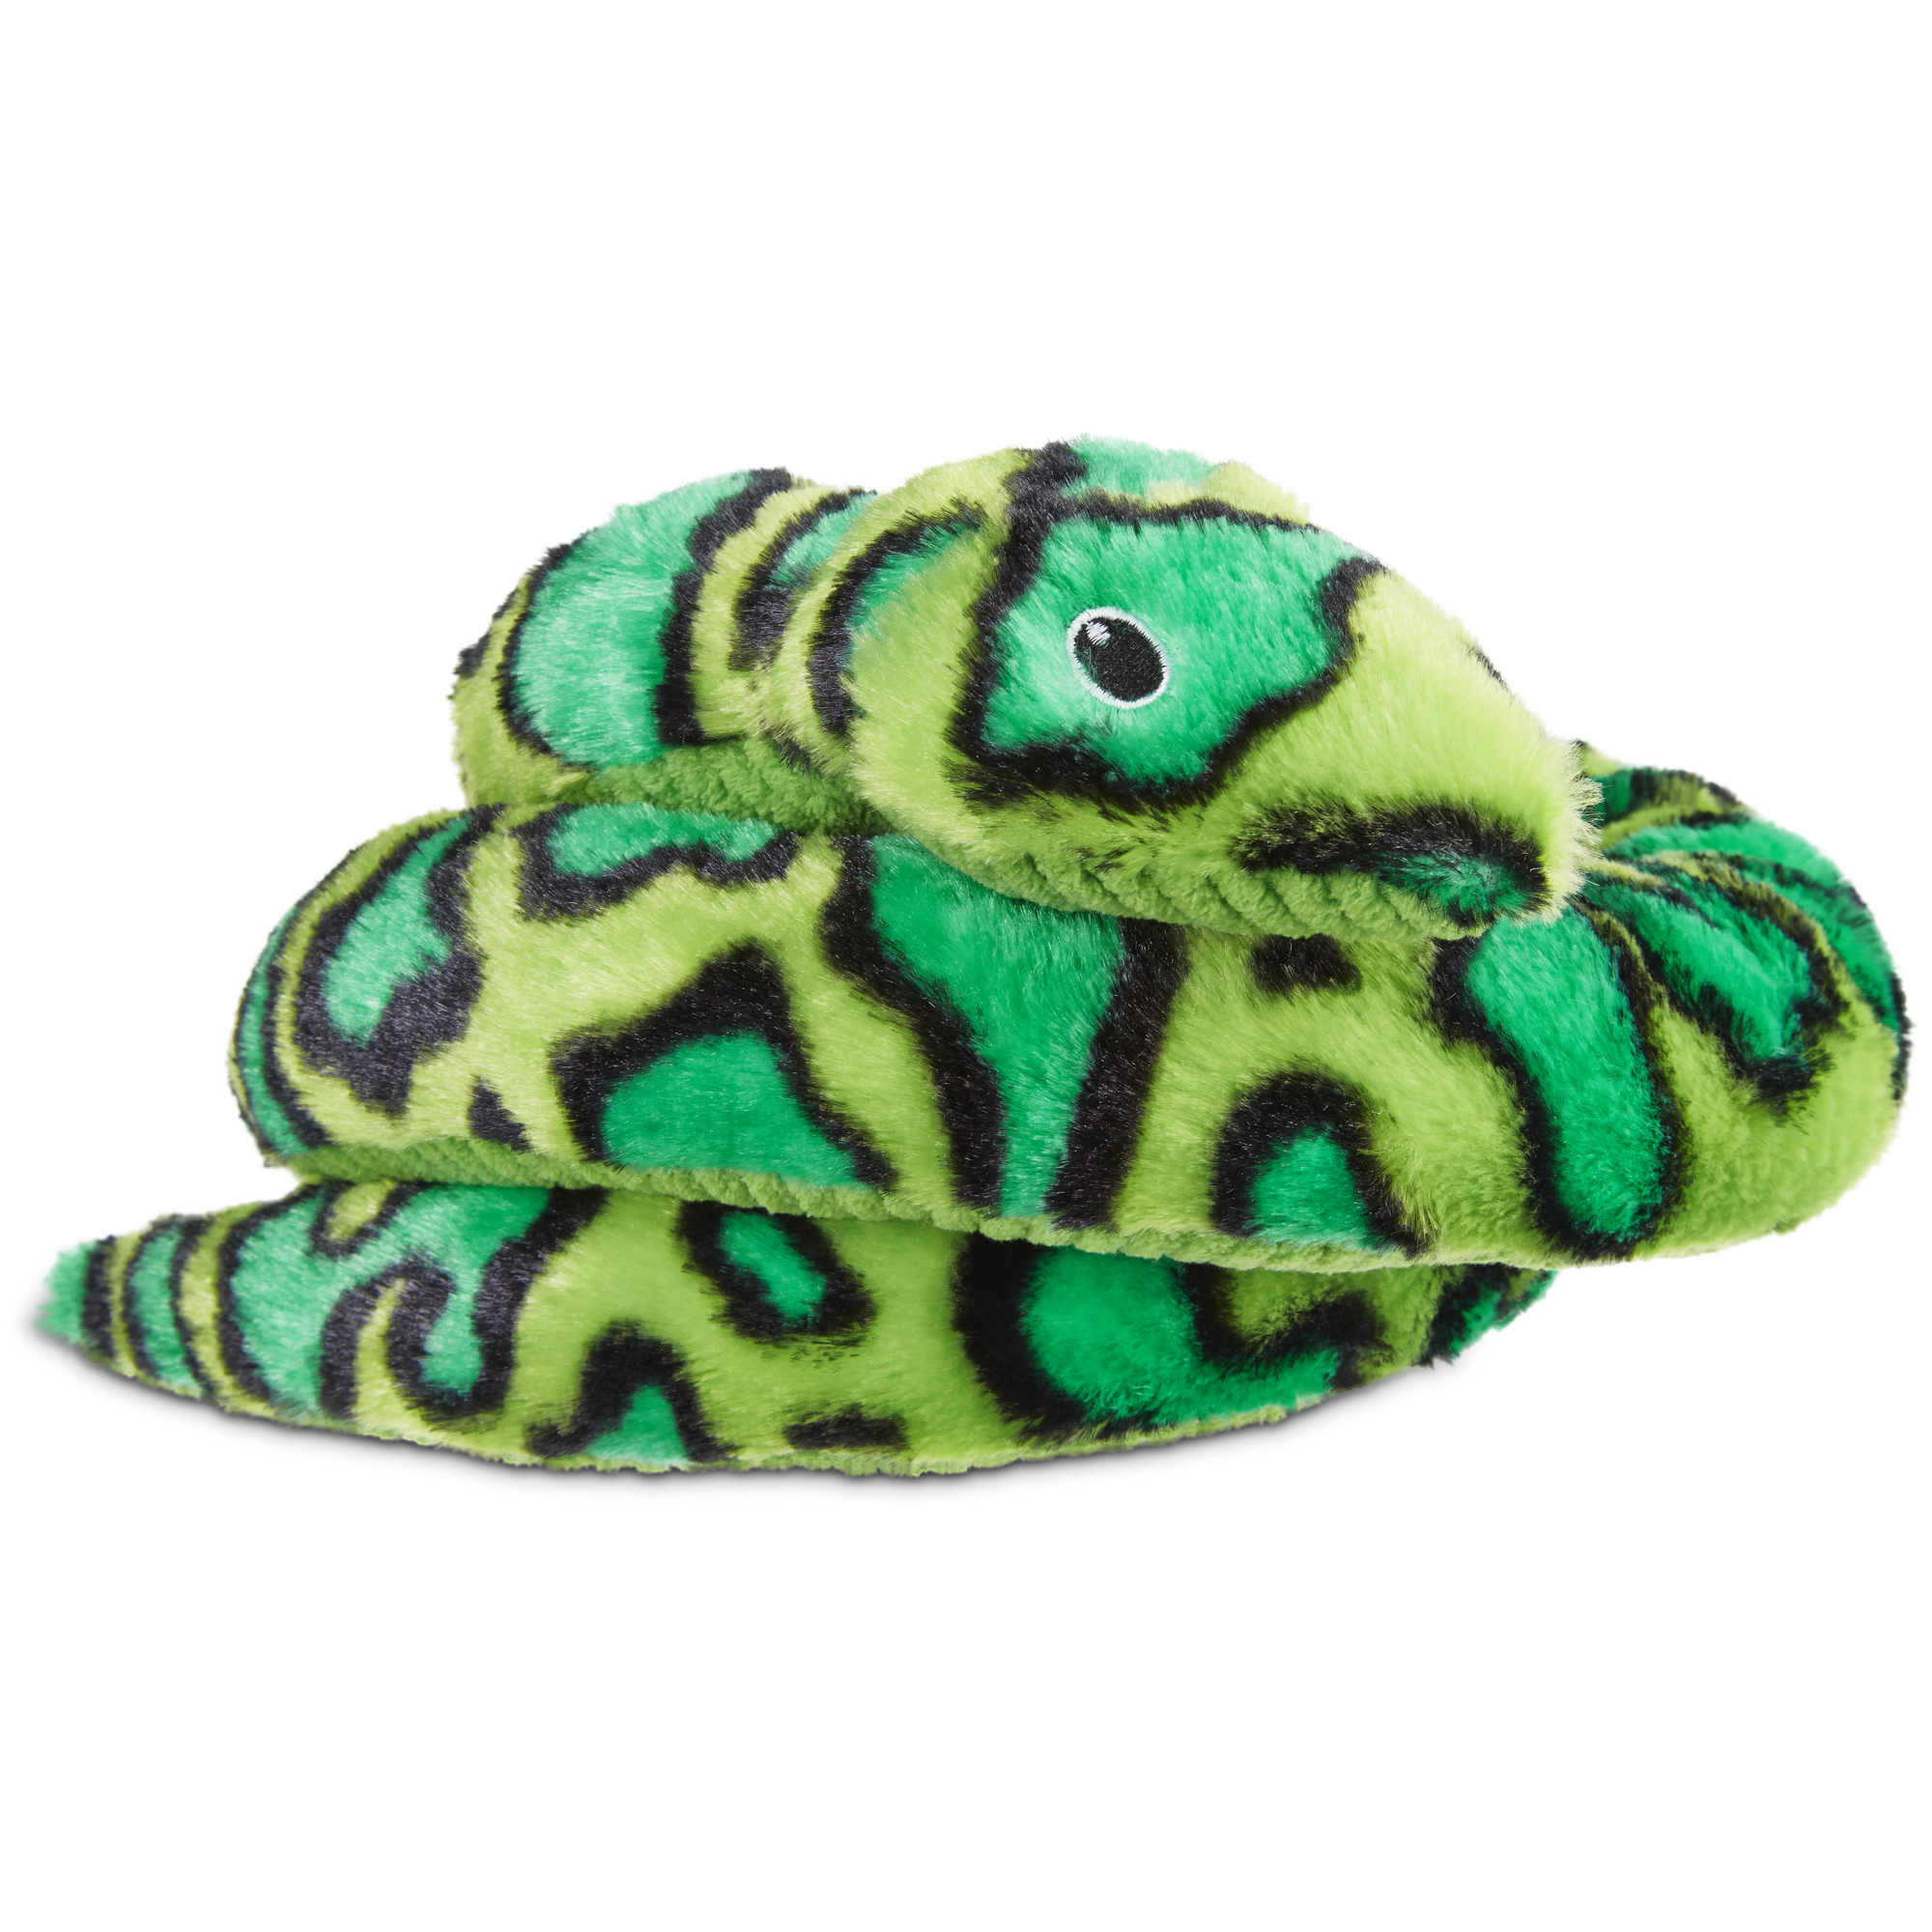 large stuffed snake toy